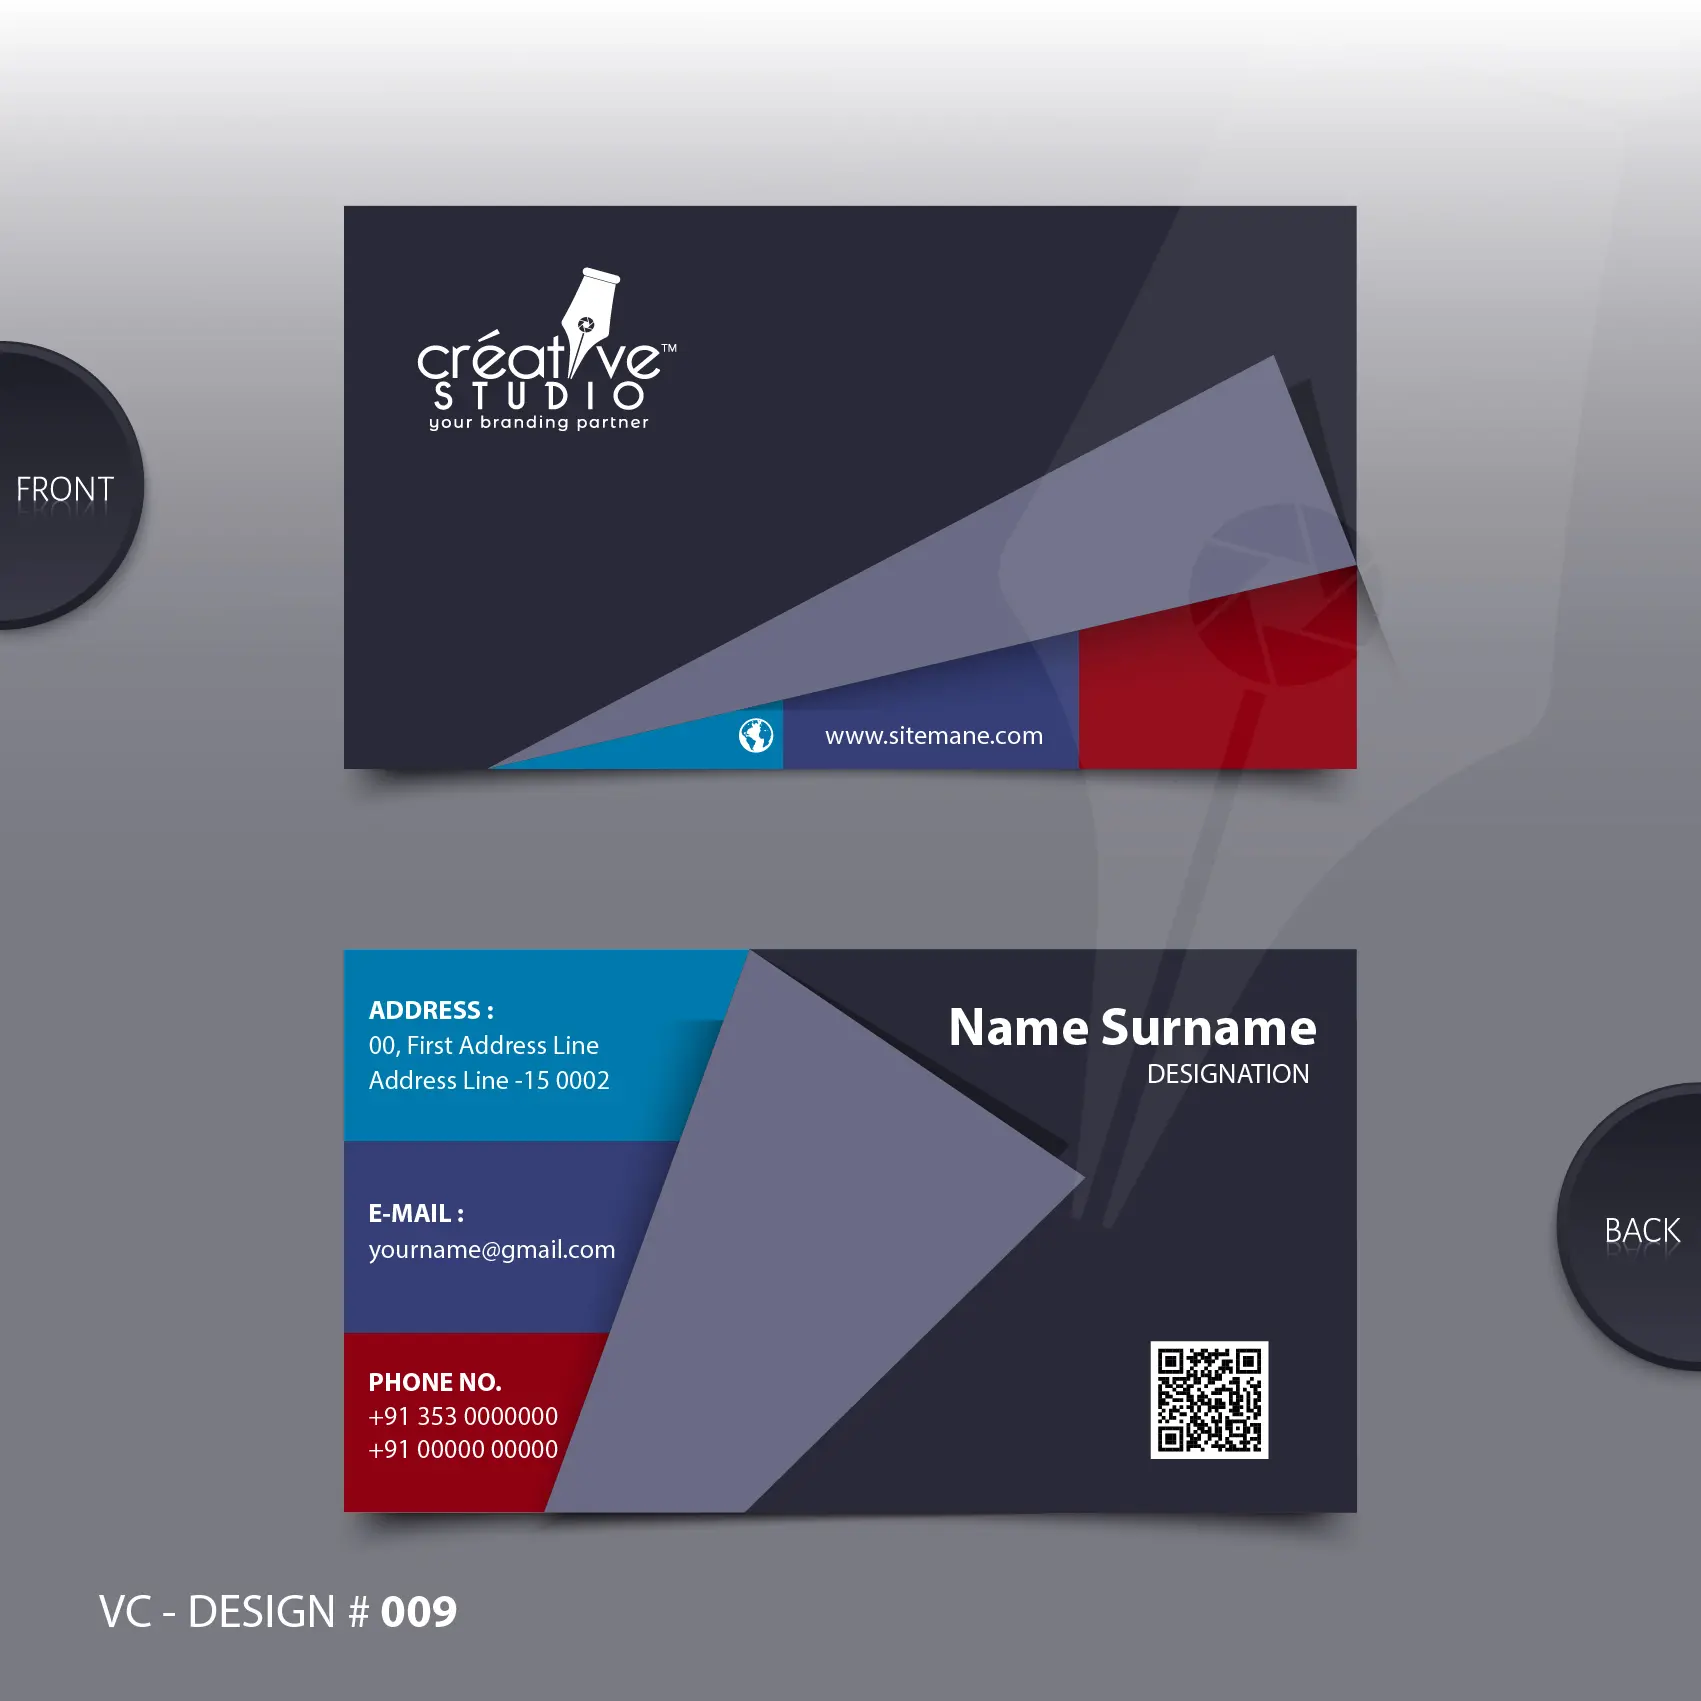 VC DESIGN 009 01 - Visiting Card Portfolio by Creative Studio